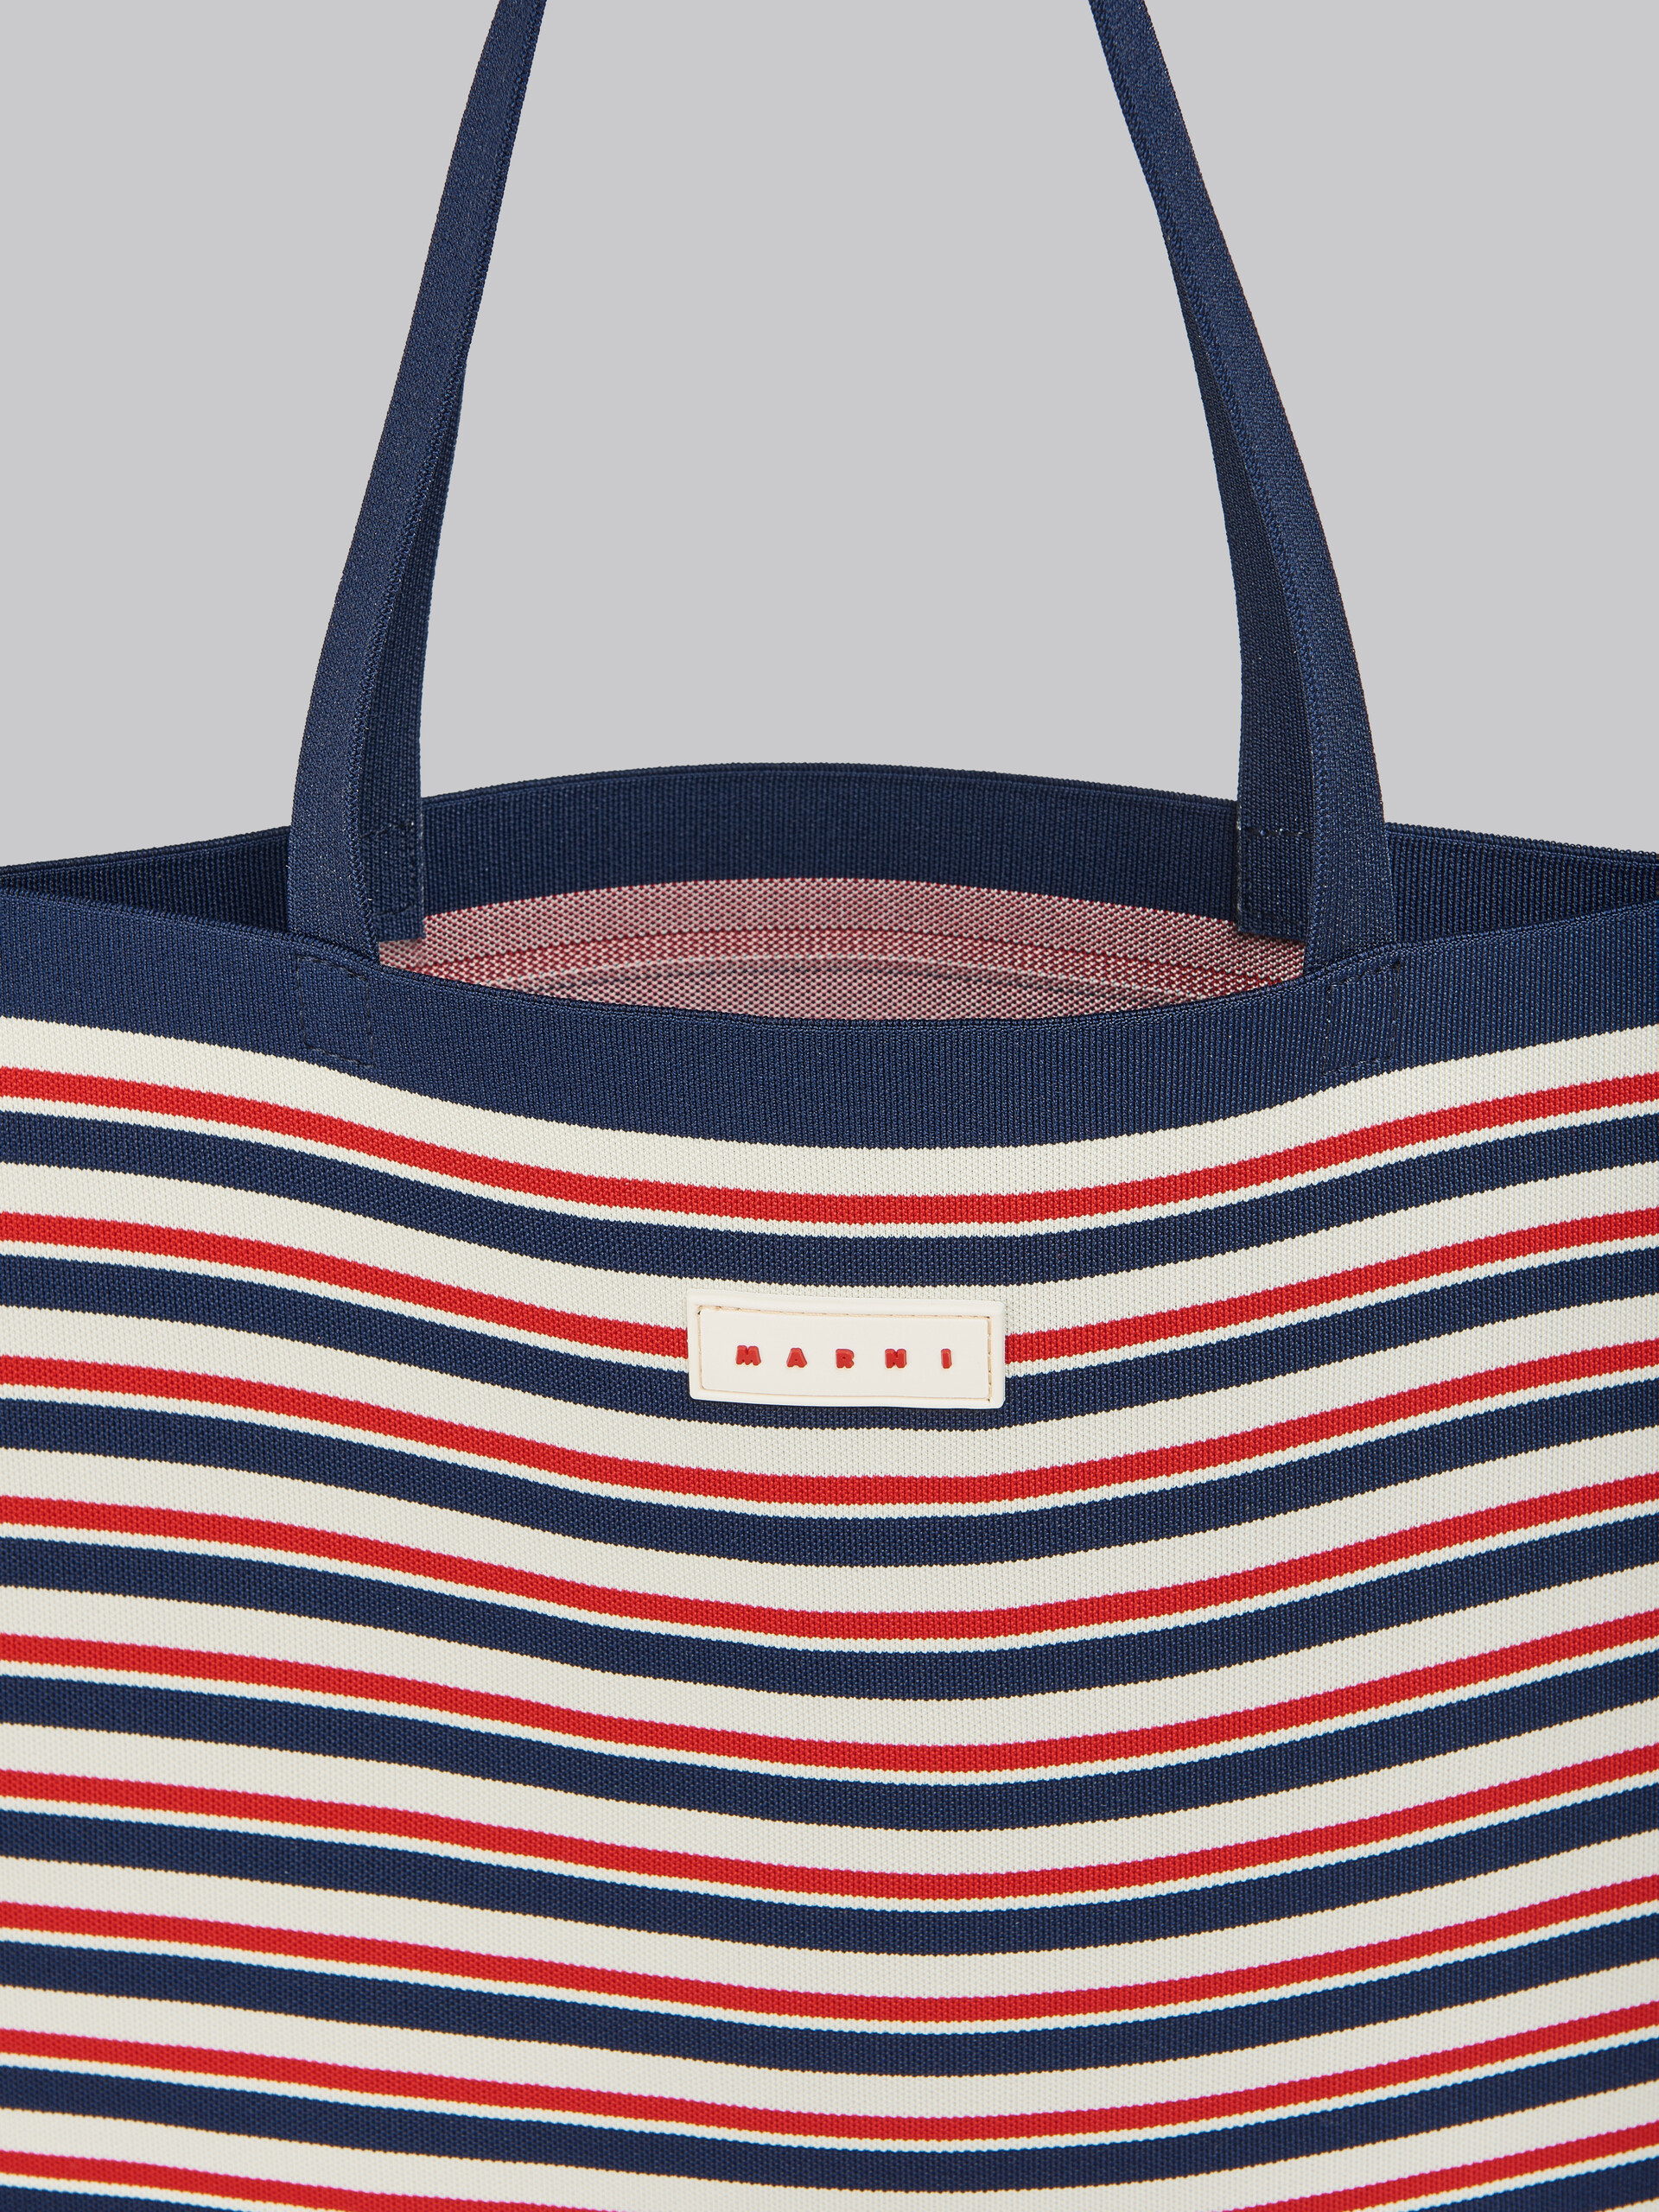 Bolso tote plano de jacquard a rayas azul marino, blanco y rojo - Bolsos shopper - Image 4